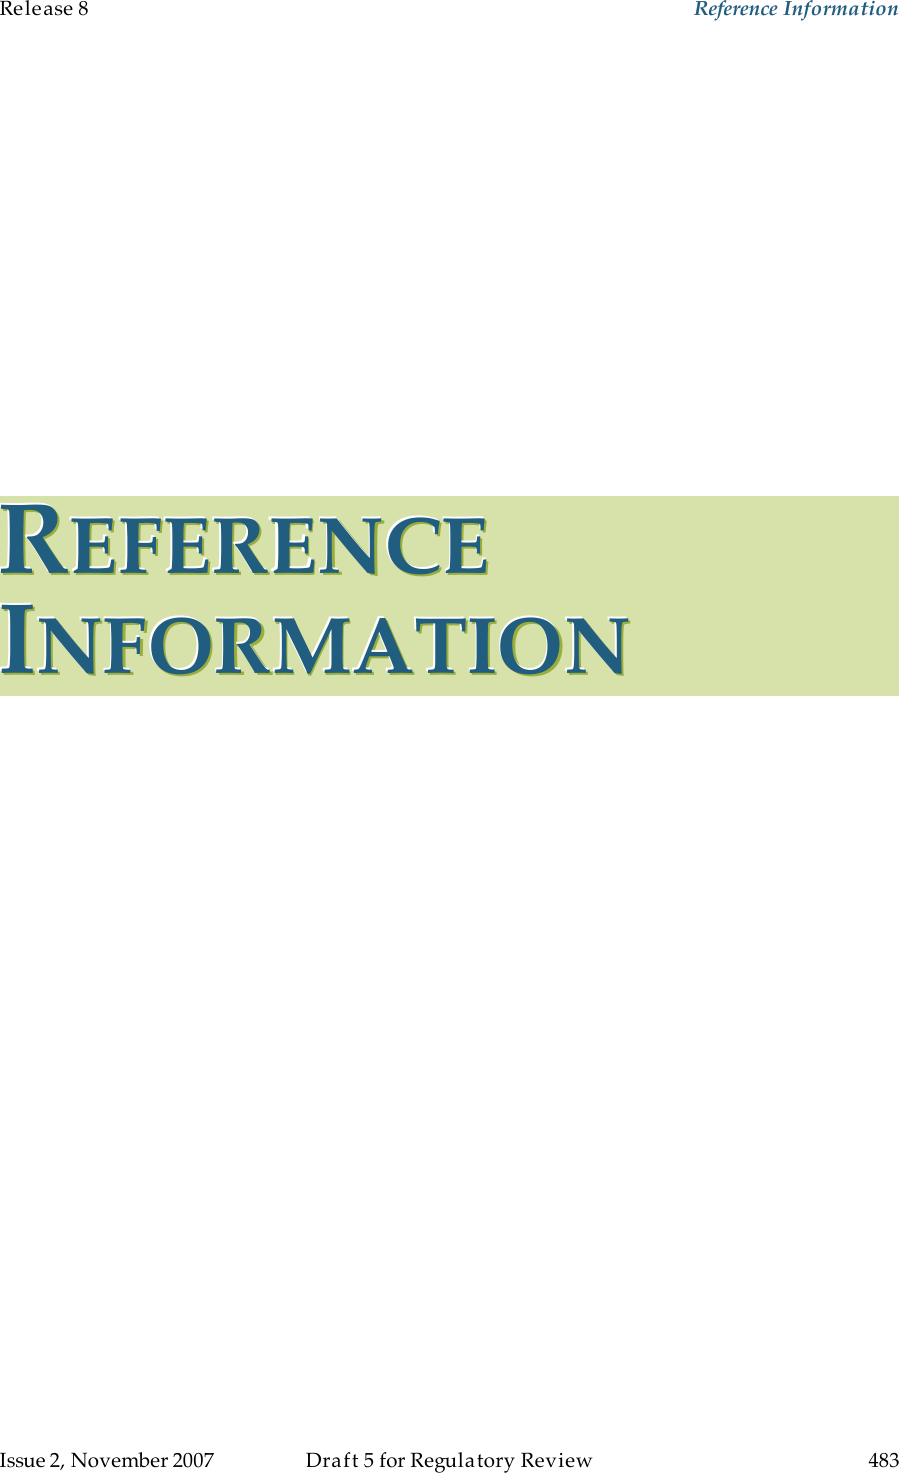 Release 8    Reference Information   Issue 2, November 2007  Draft 5 for Regulatory Review  483     RRREEEFFFEEERRREEENNNCCCEEE   IIINNNFFFOOORRRMMMAAATTTIIIOOONNN   